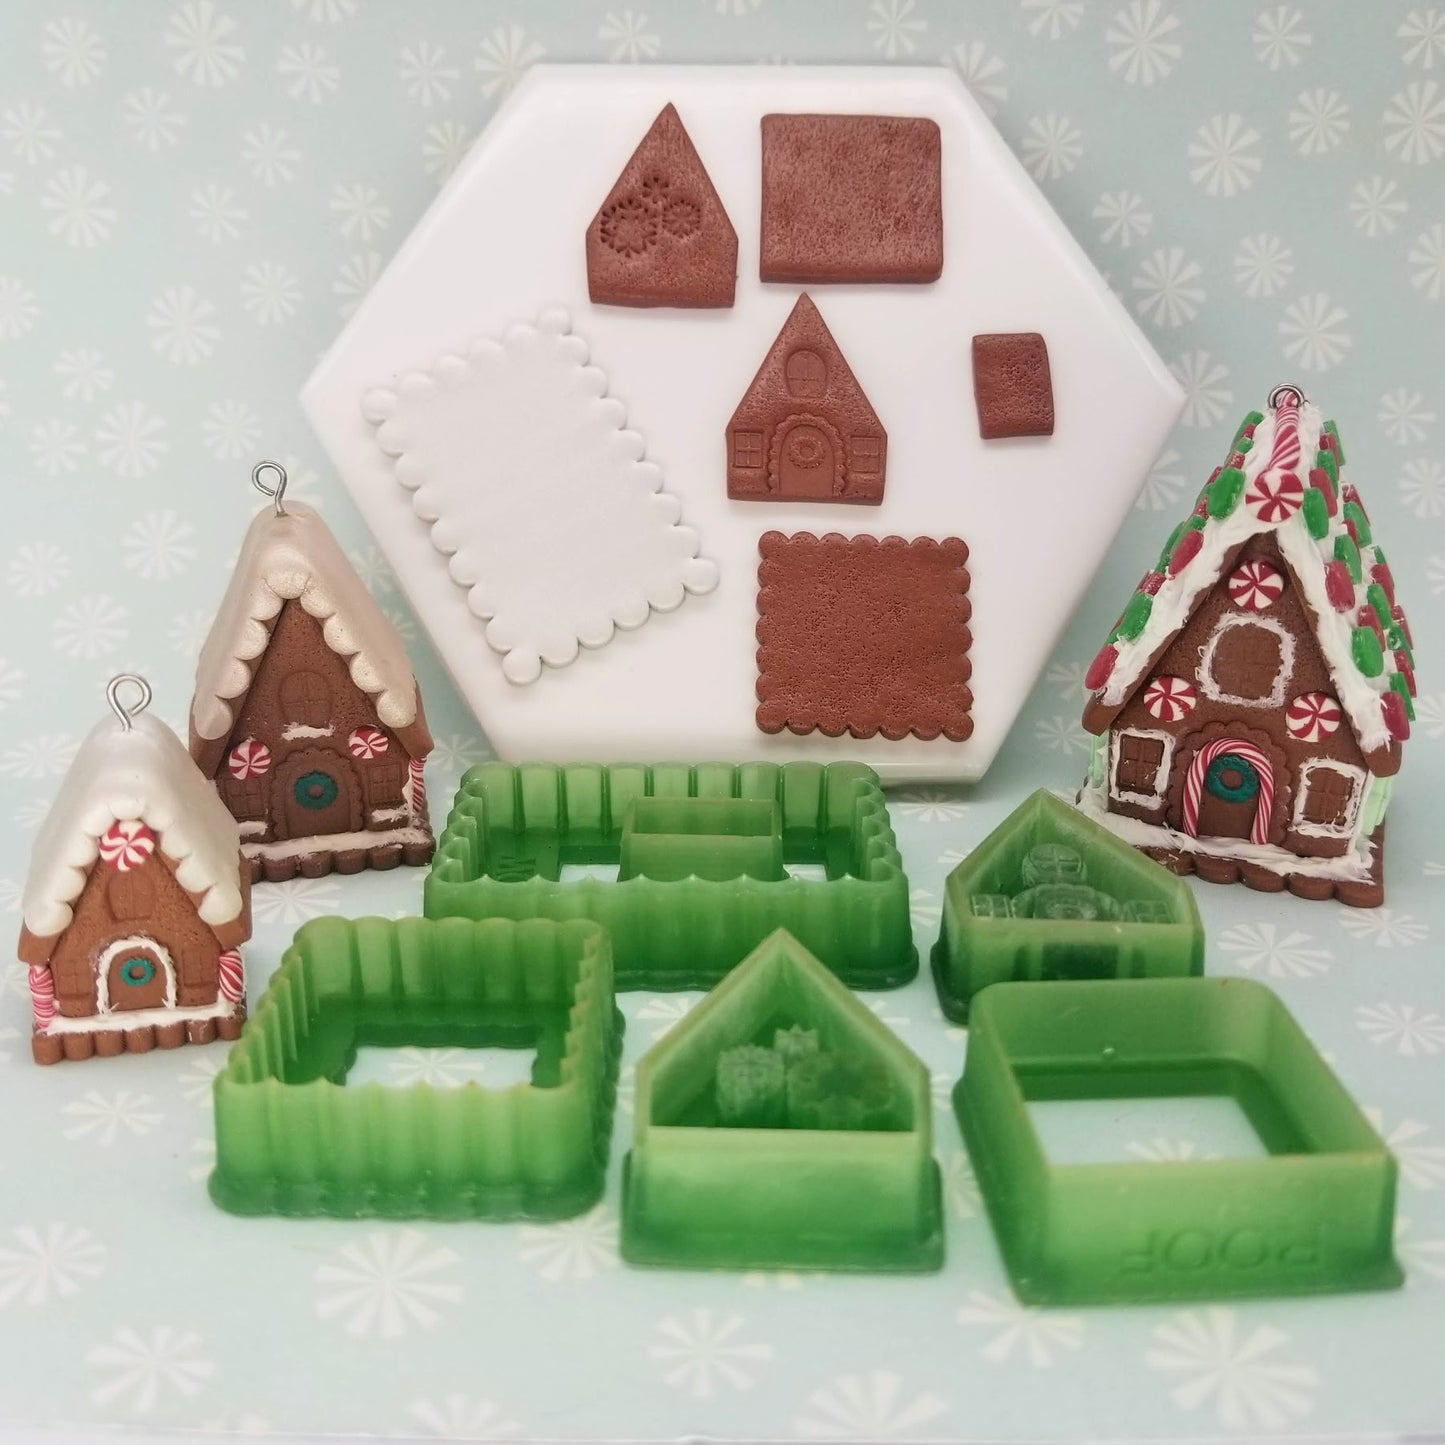 3D Gingerbread House Kit